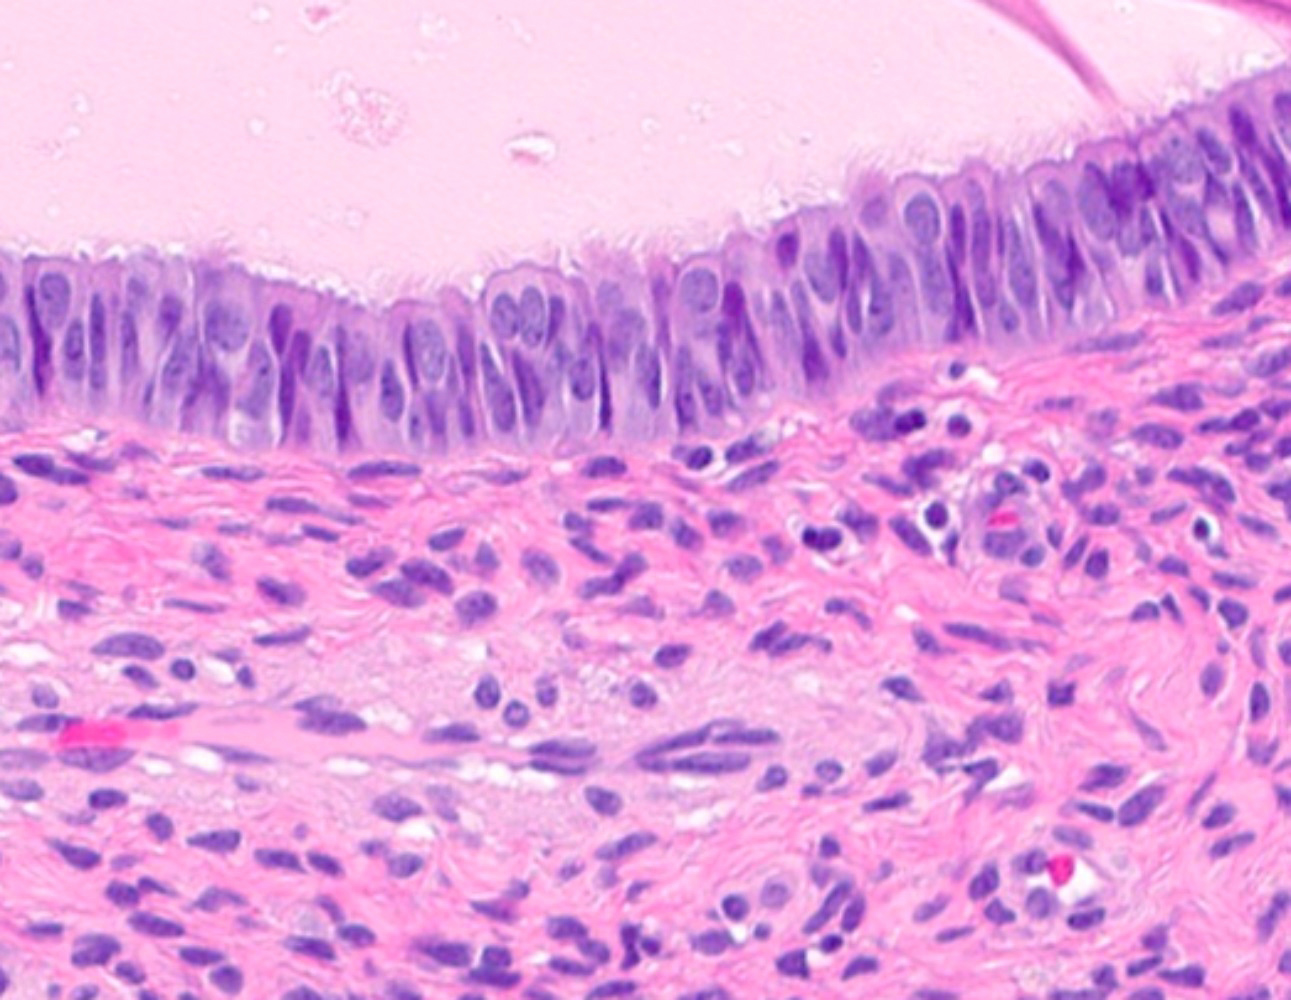 Tubal (ciliated cell) metaplasia